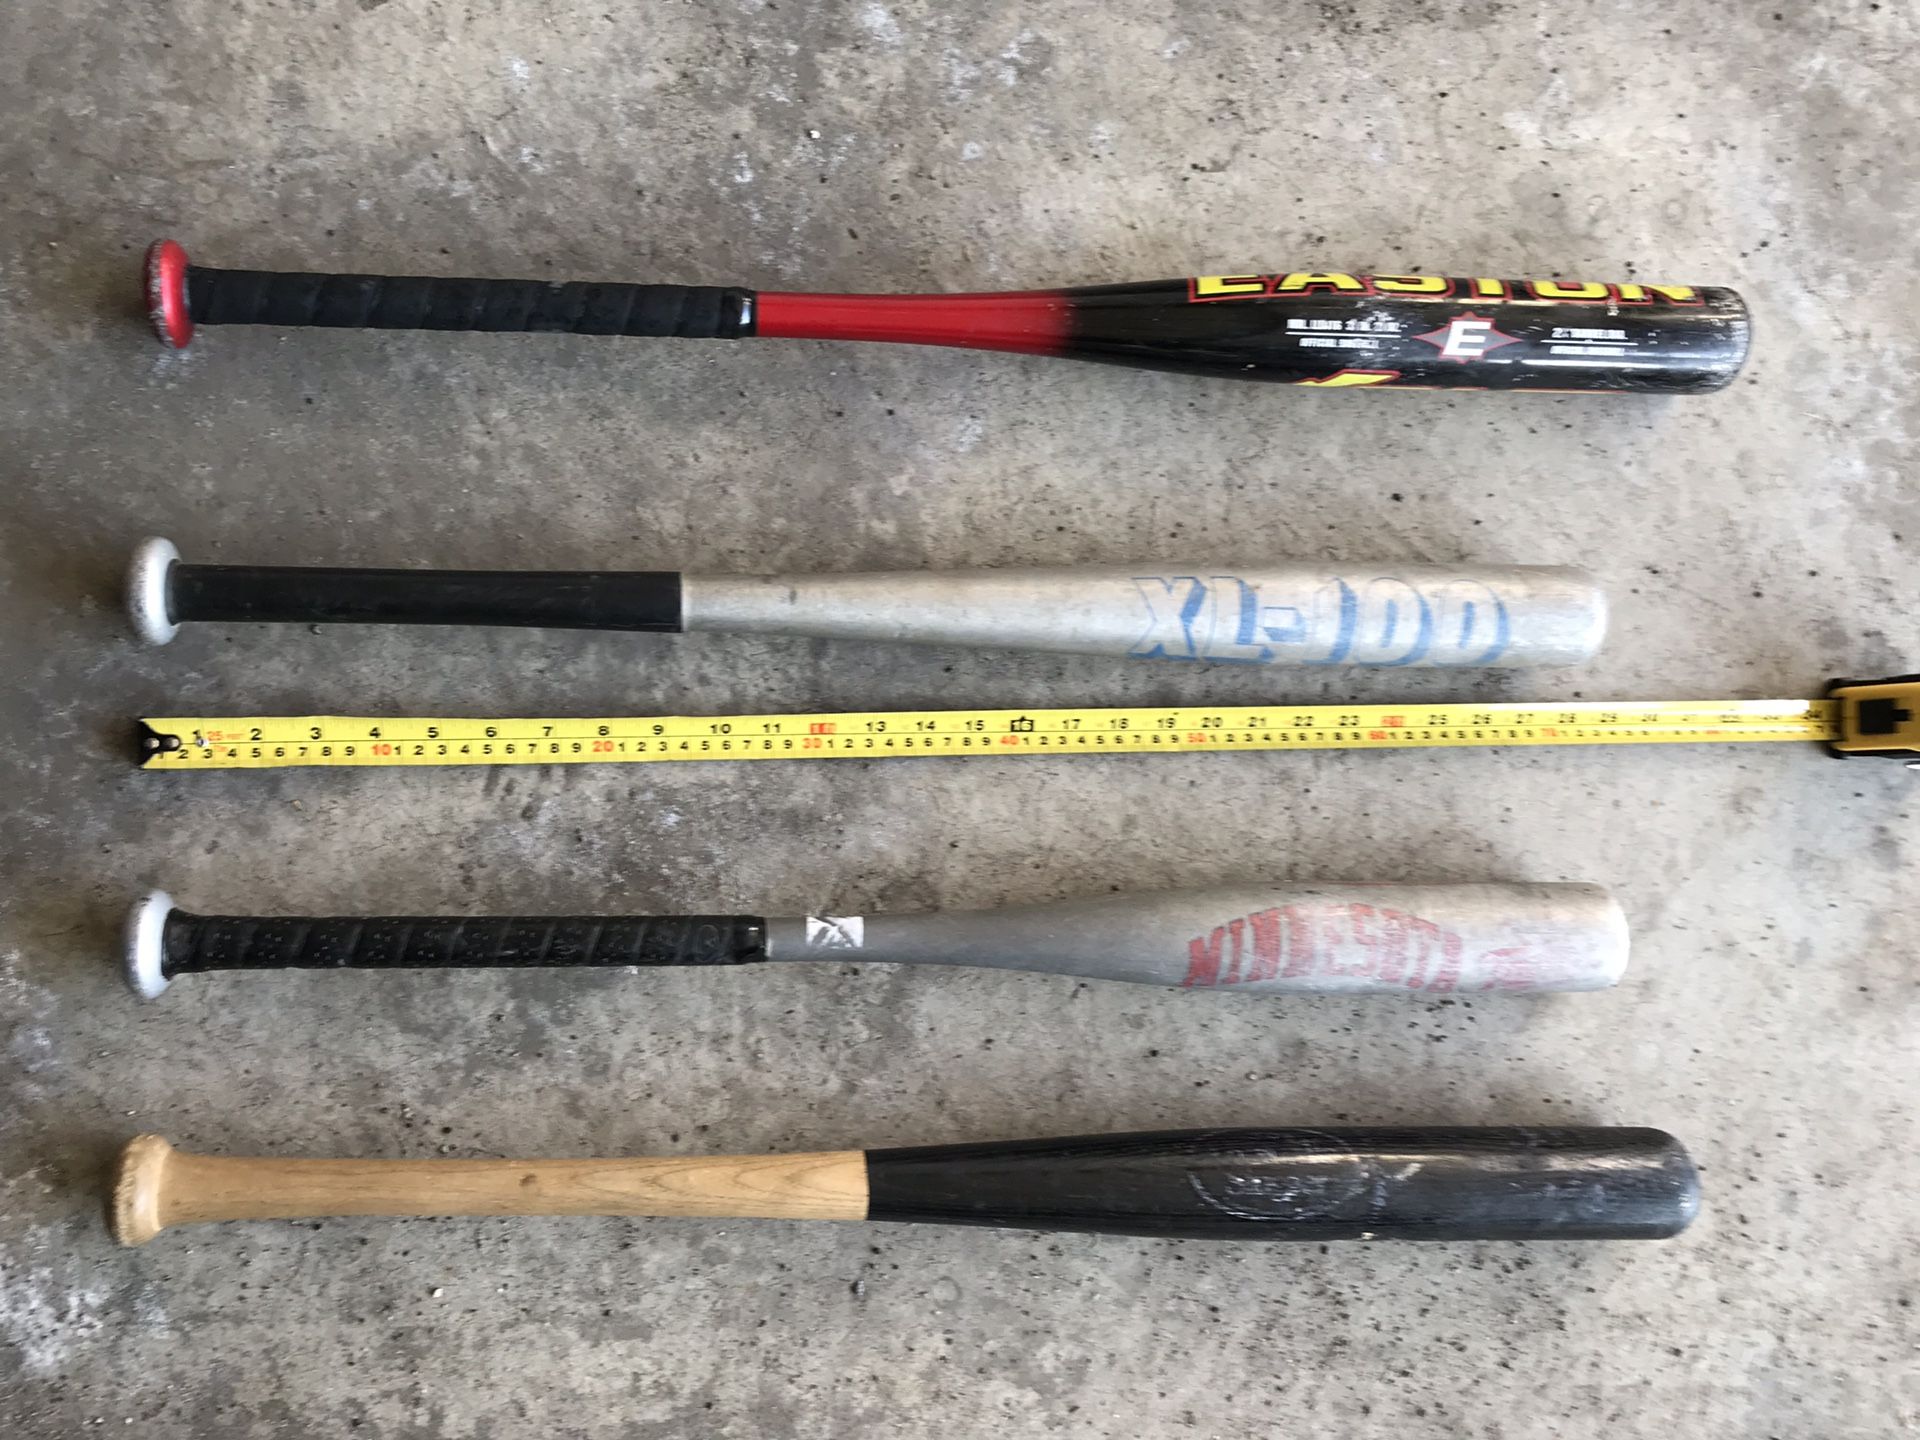 Little League Baseball bats